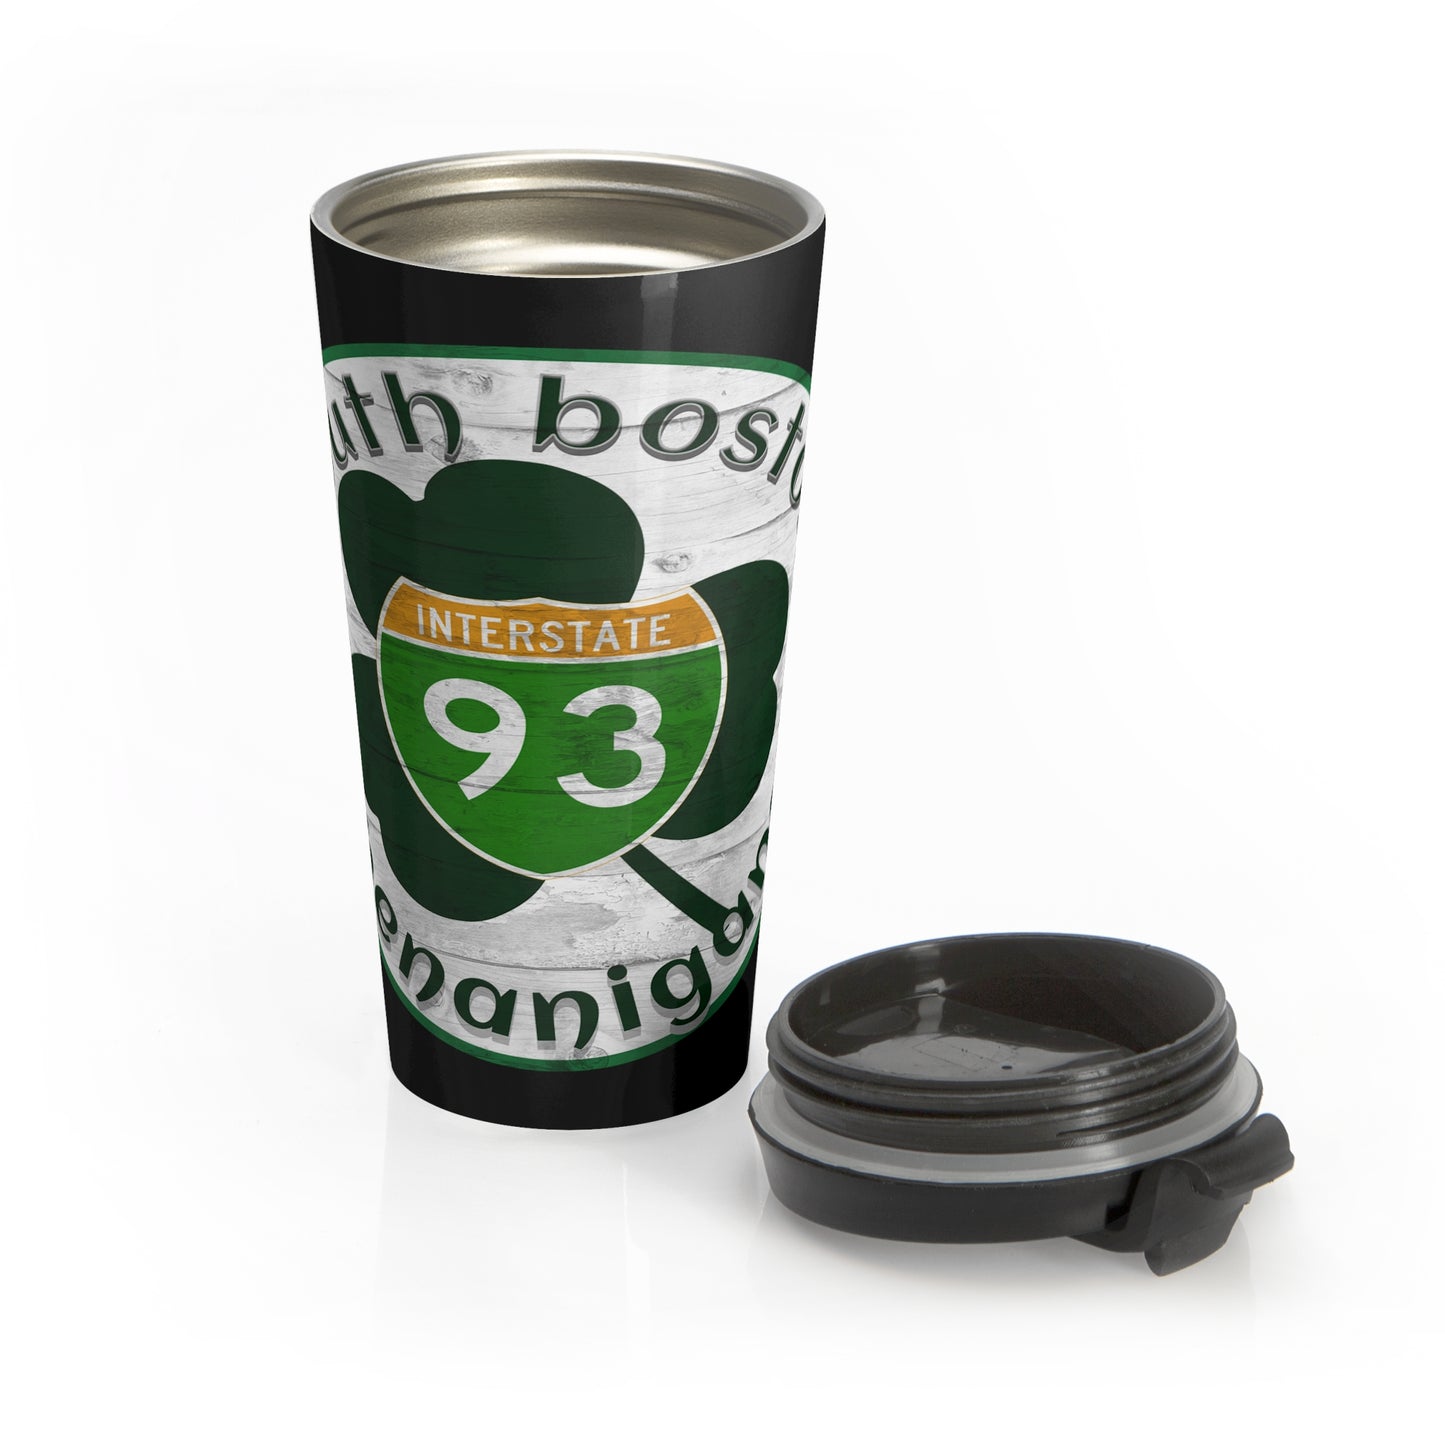 I-93, SOUTH BOSTON, Stainless Steel Travel Mug